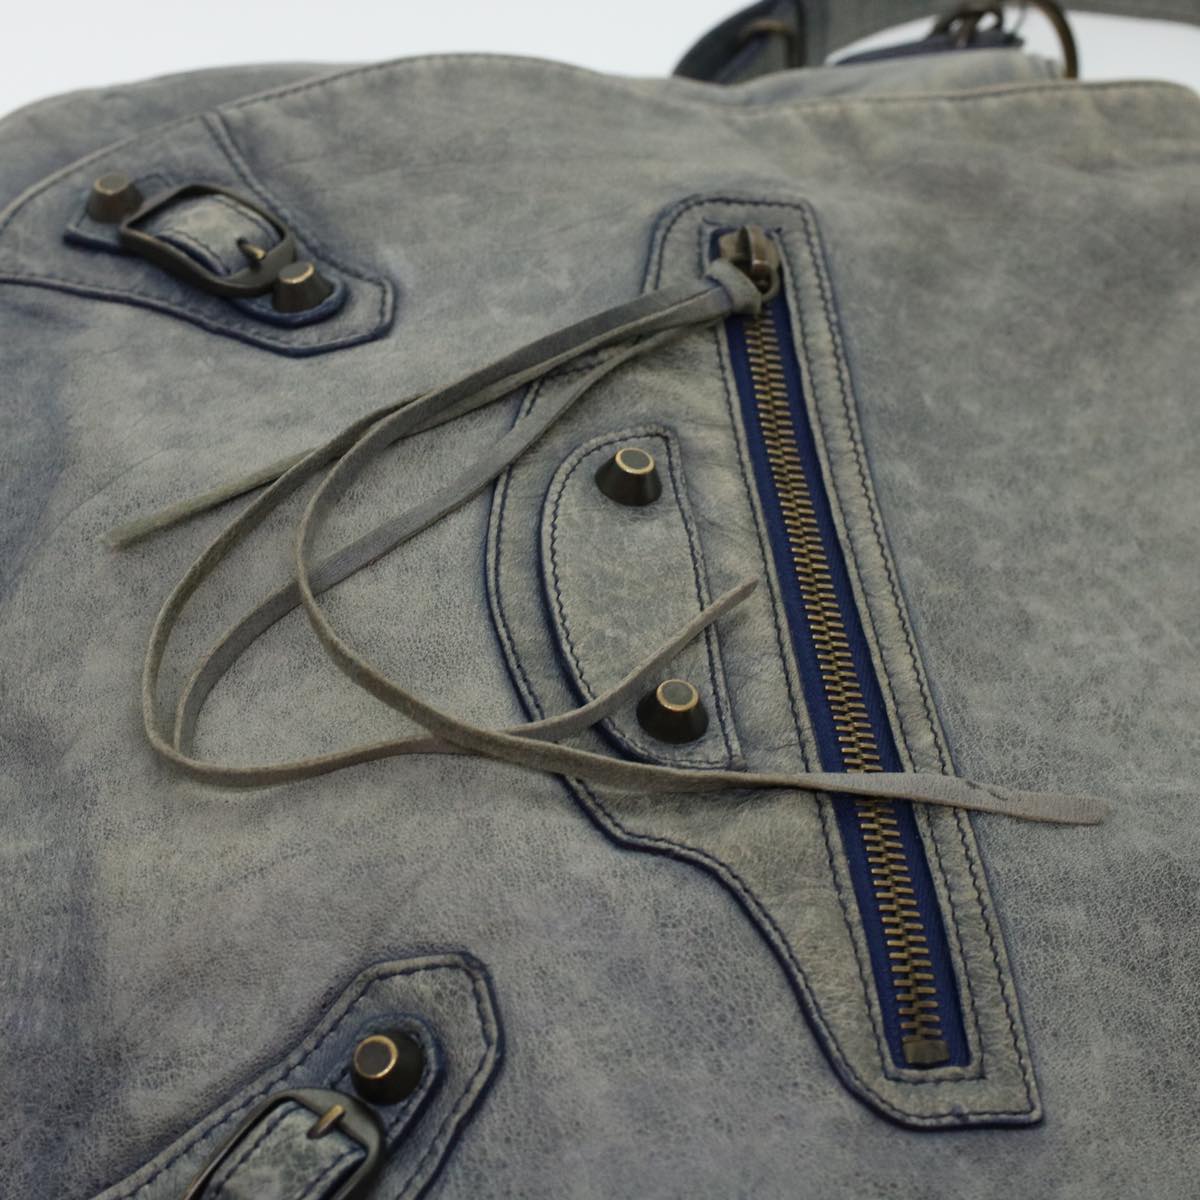 BALENCIAGA Classic Folk Shoulder Bag Leather Navy 246432 Auth 41401